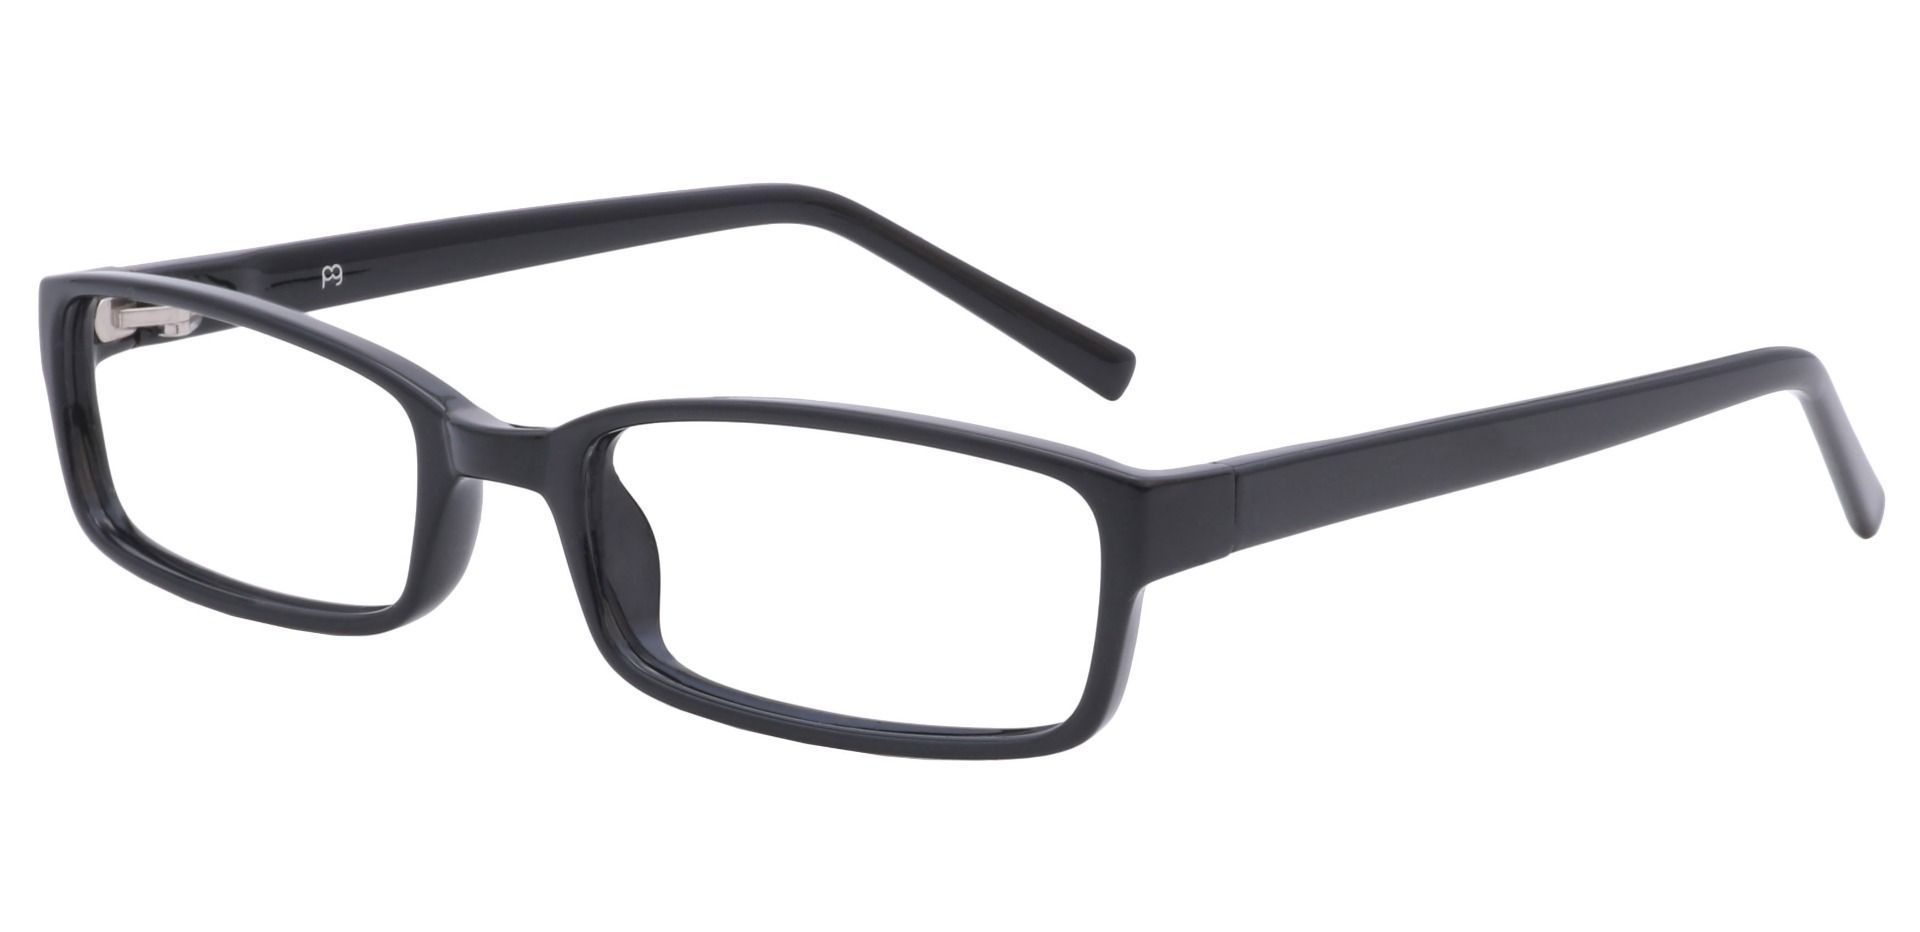 Sanford Rectangle Single Vision Glasses - Black